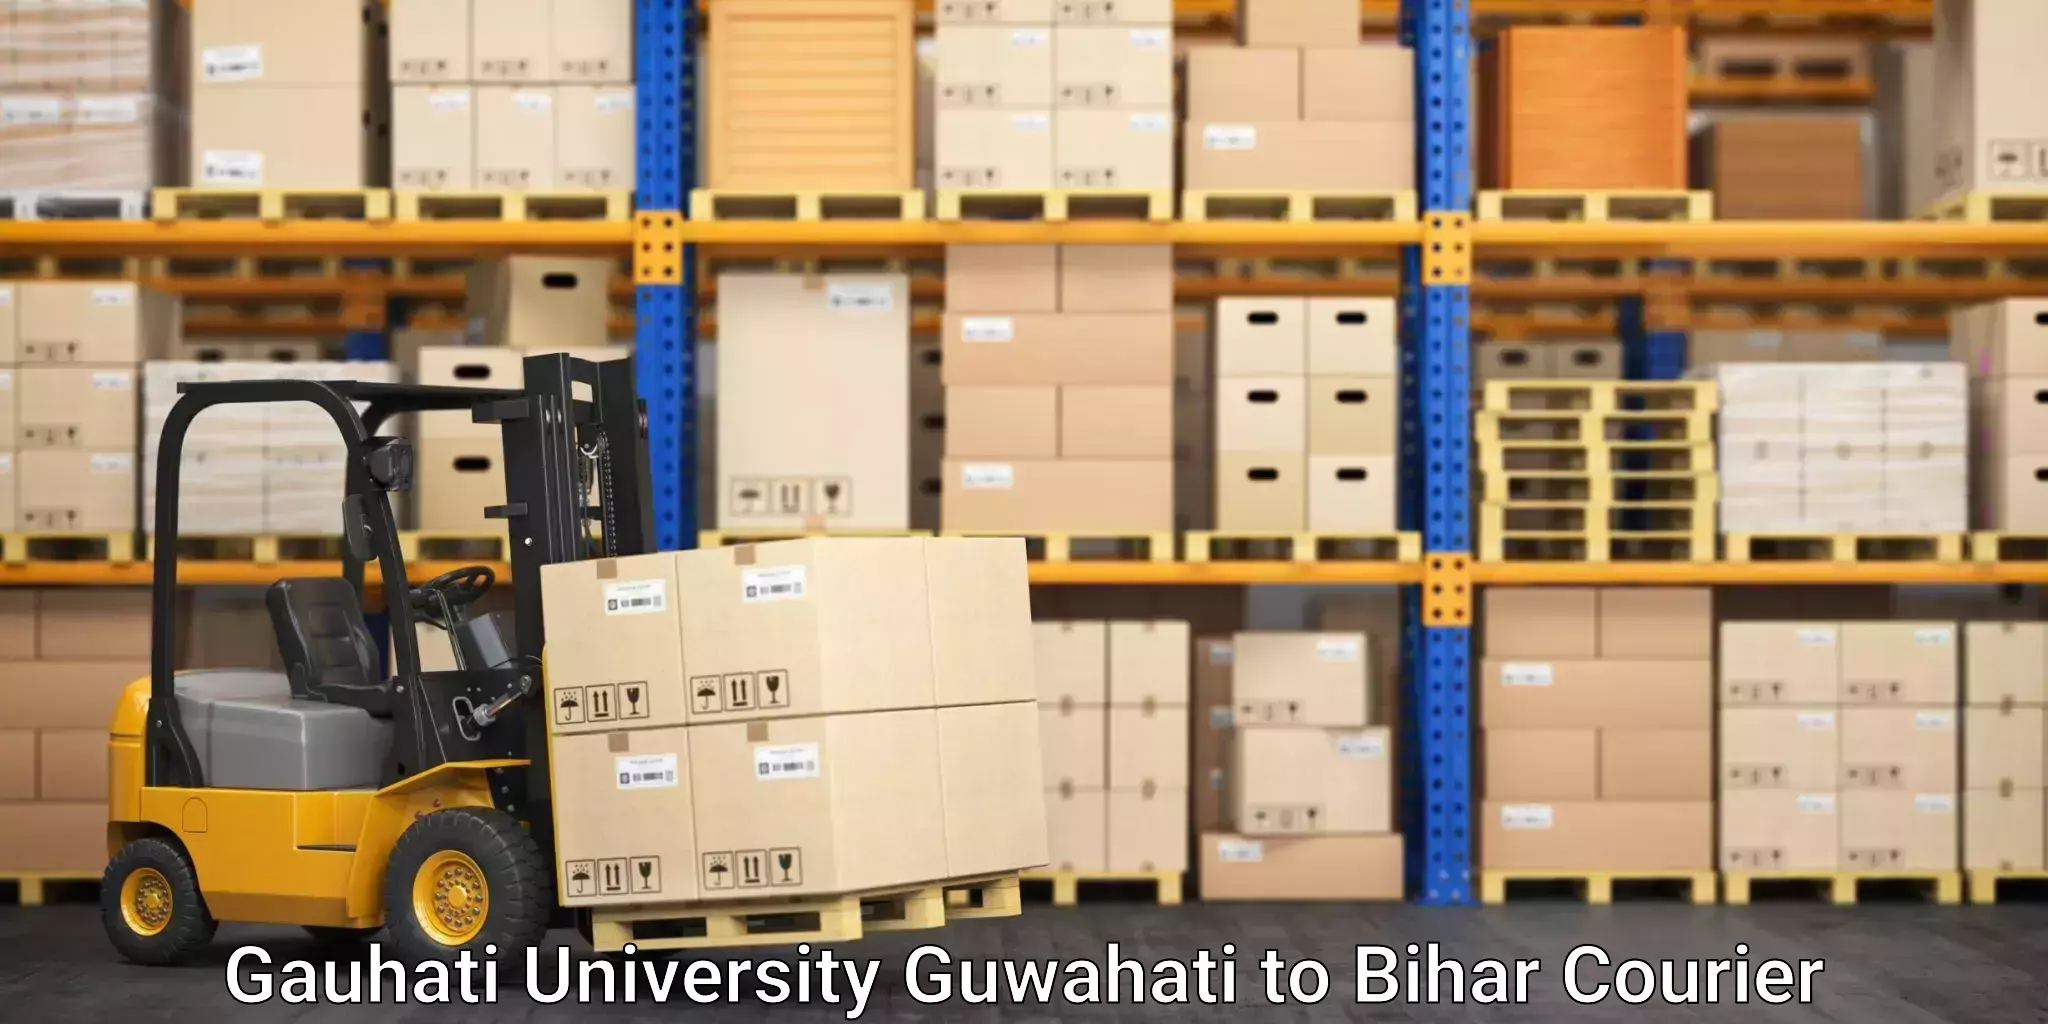 Courier service booking Gauhati University Guwahati to Jagdishpur Bhojpur